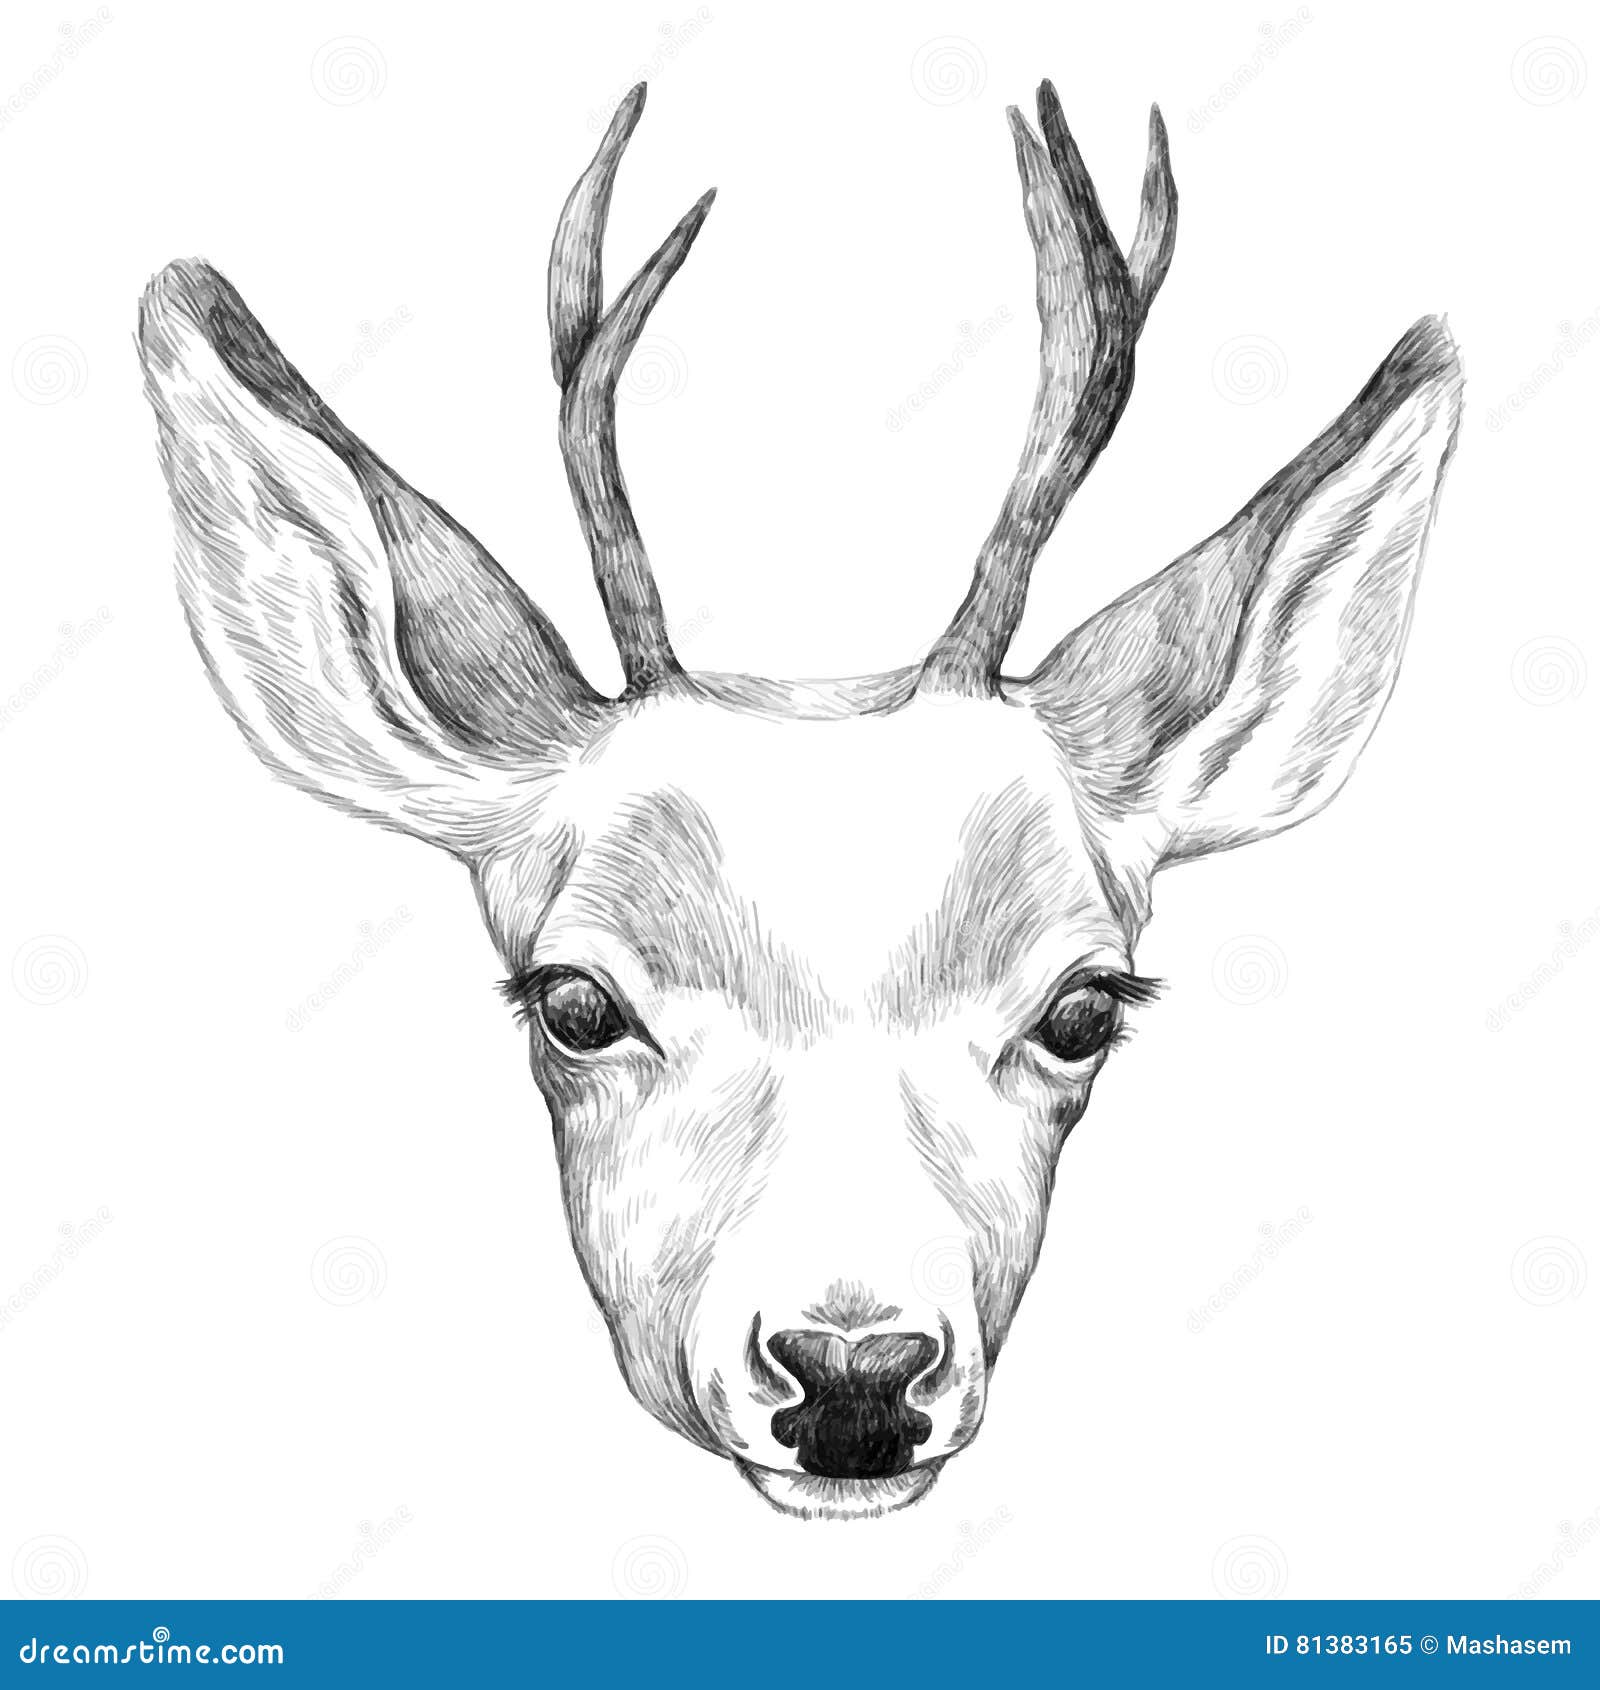 pencil sketches drawings deer sketch | Dream Driven Art